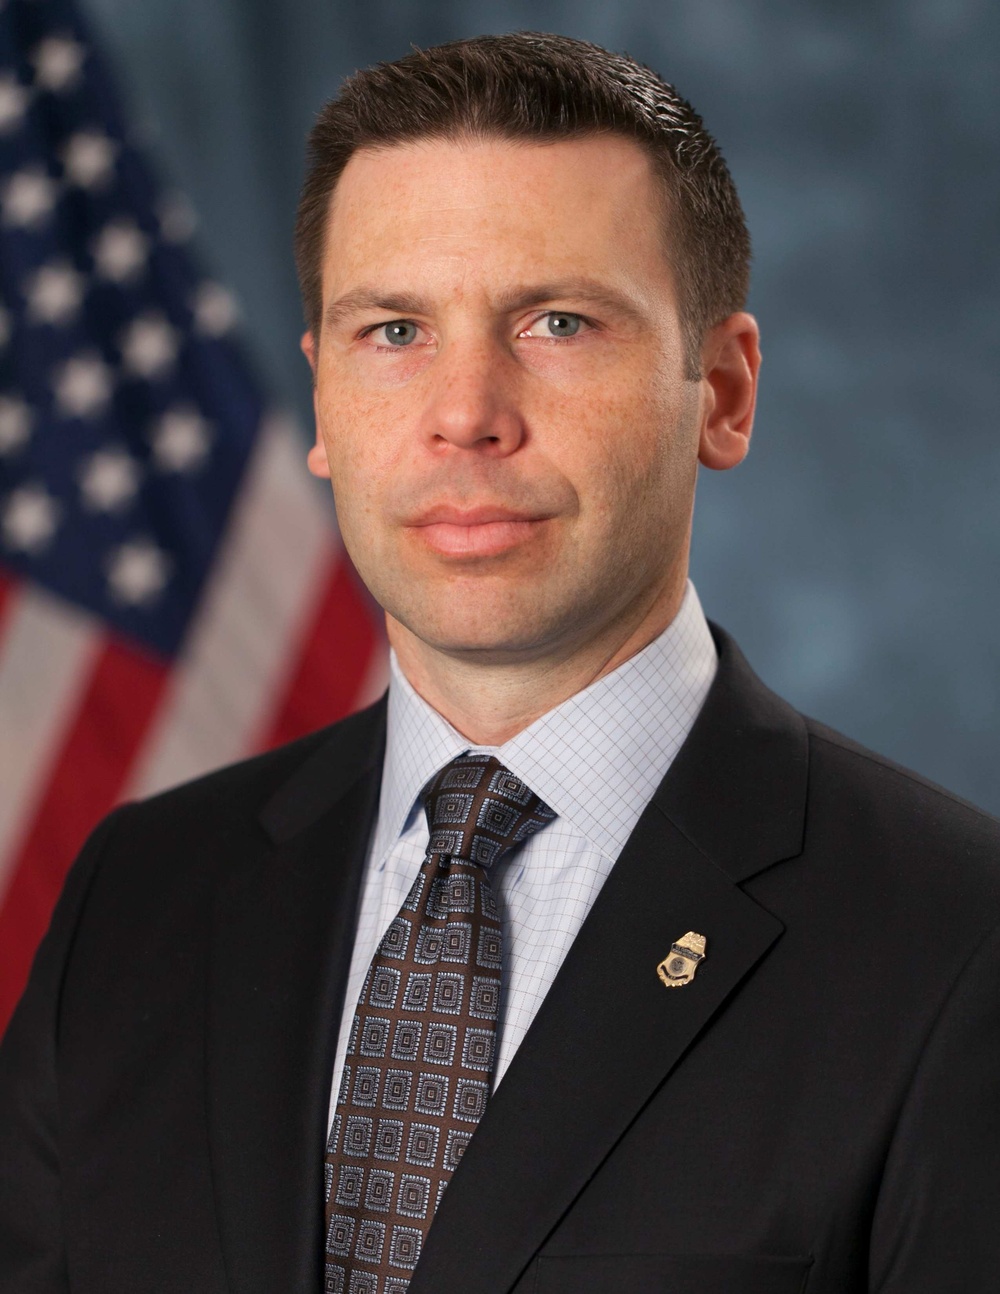 U.S. Customs and Border Protection Commissioner Kevin K. McAleenan